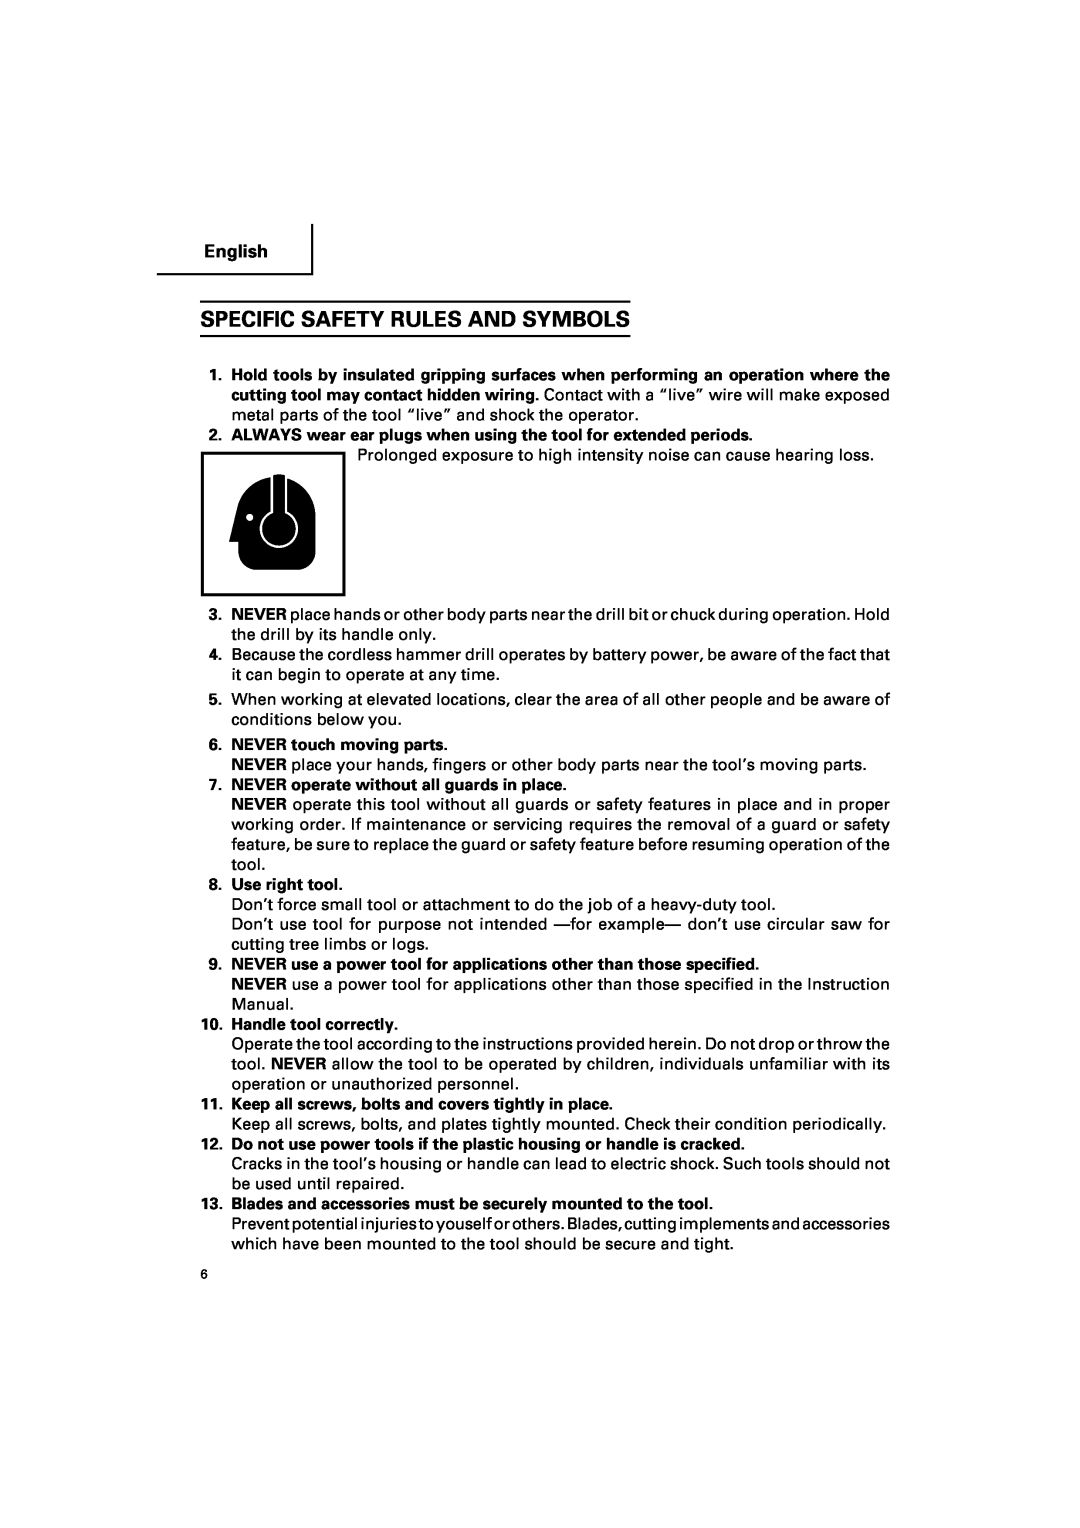 Hitachi DV 18DV, DV 14DV instruction manual Specific Safety Rules And Symbols, English 